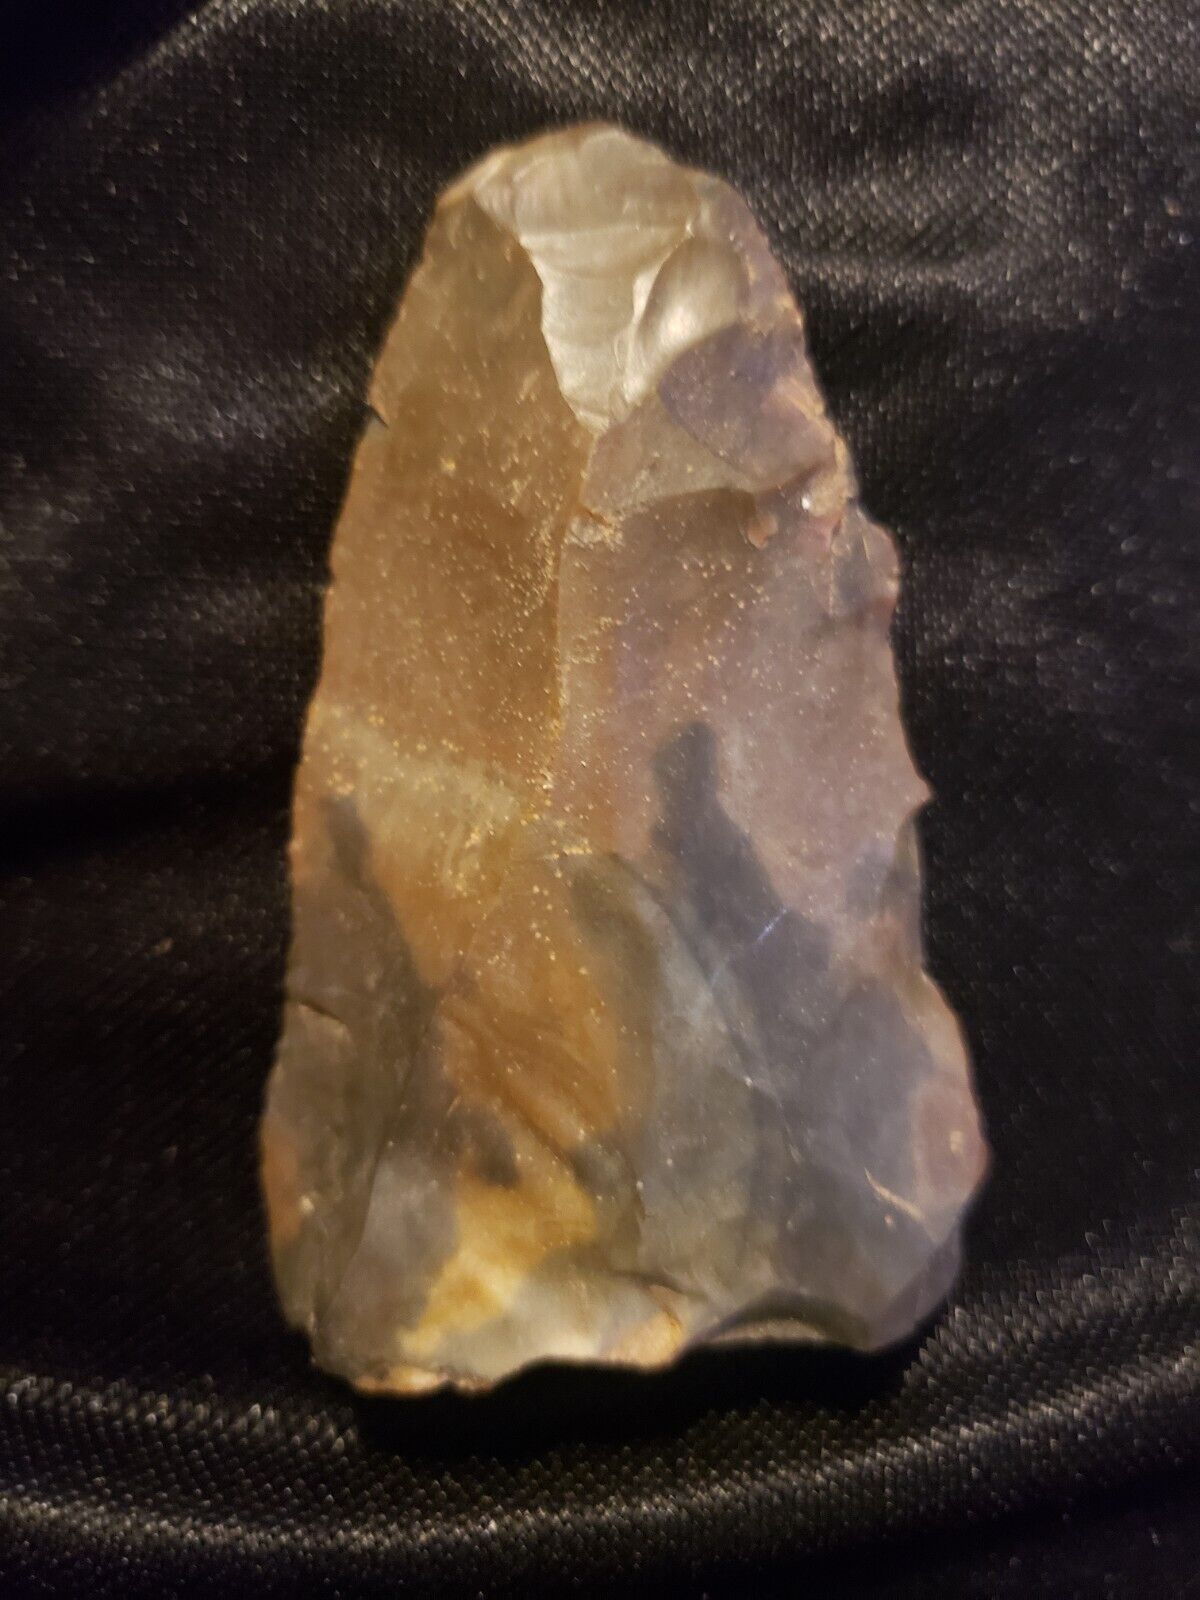 Kentucky arrowhead native american artifact.